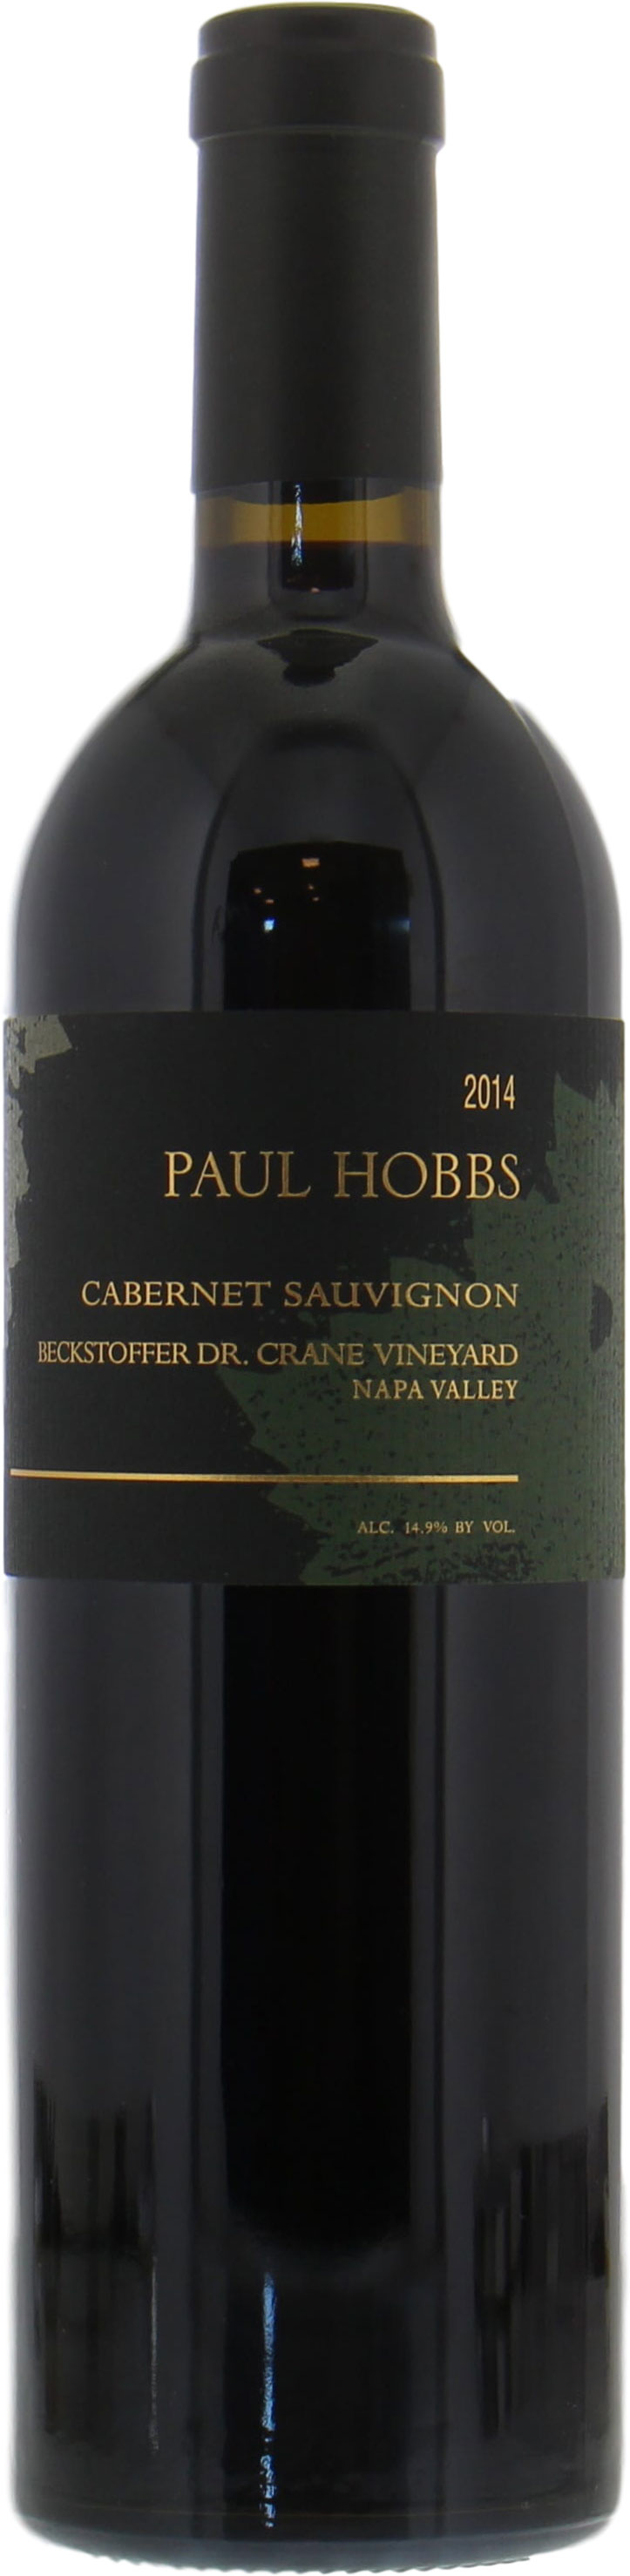 Paul Hobbs - Cabernet Sauvignon Beckstoffer Dr. Crane Vineyard 2014 Perfect